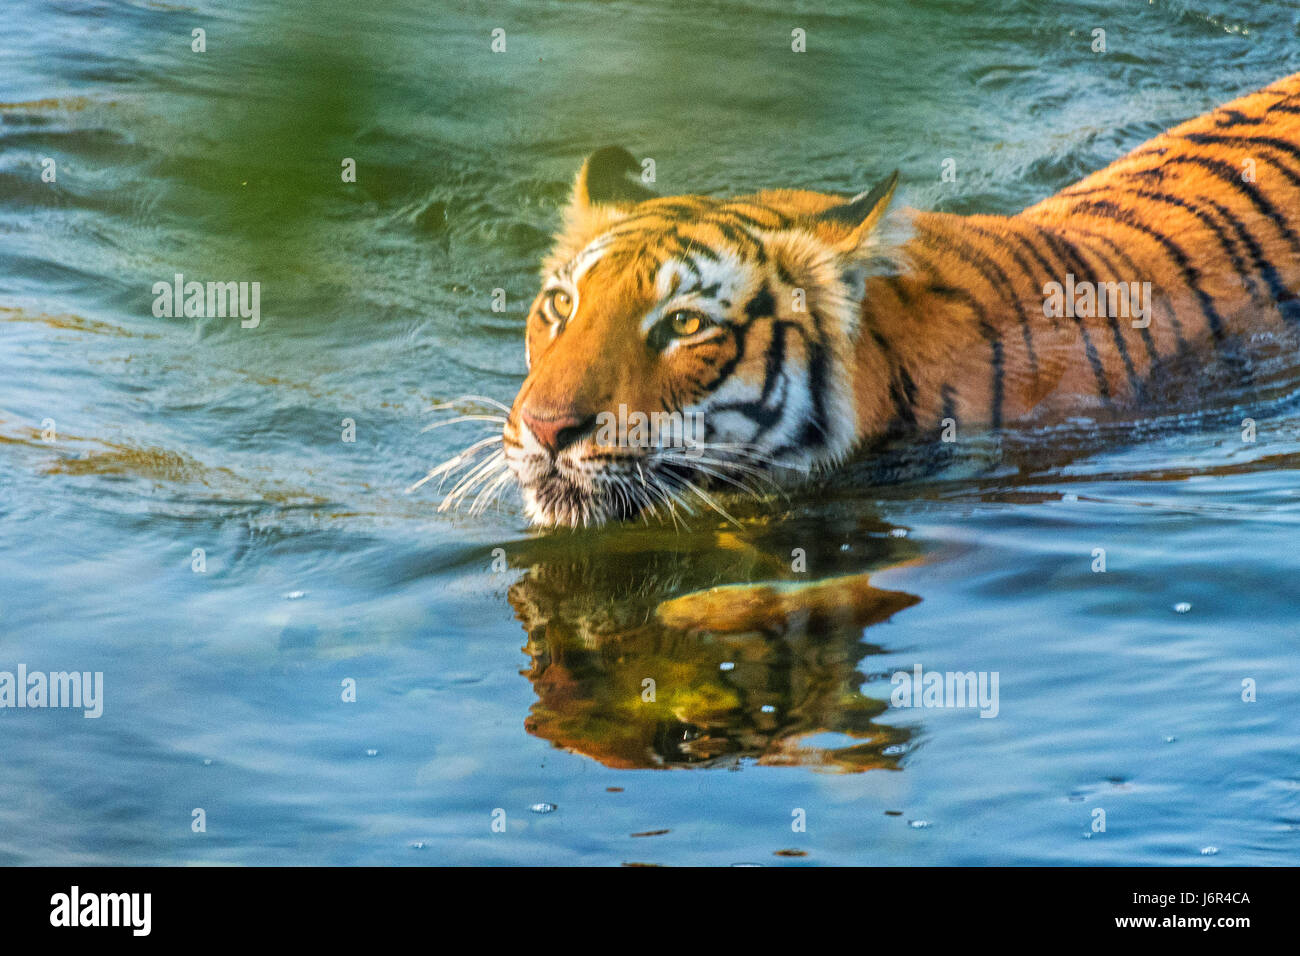 Tiger river crossing Stock Photo